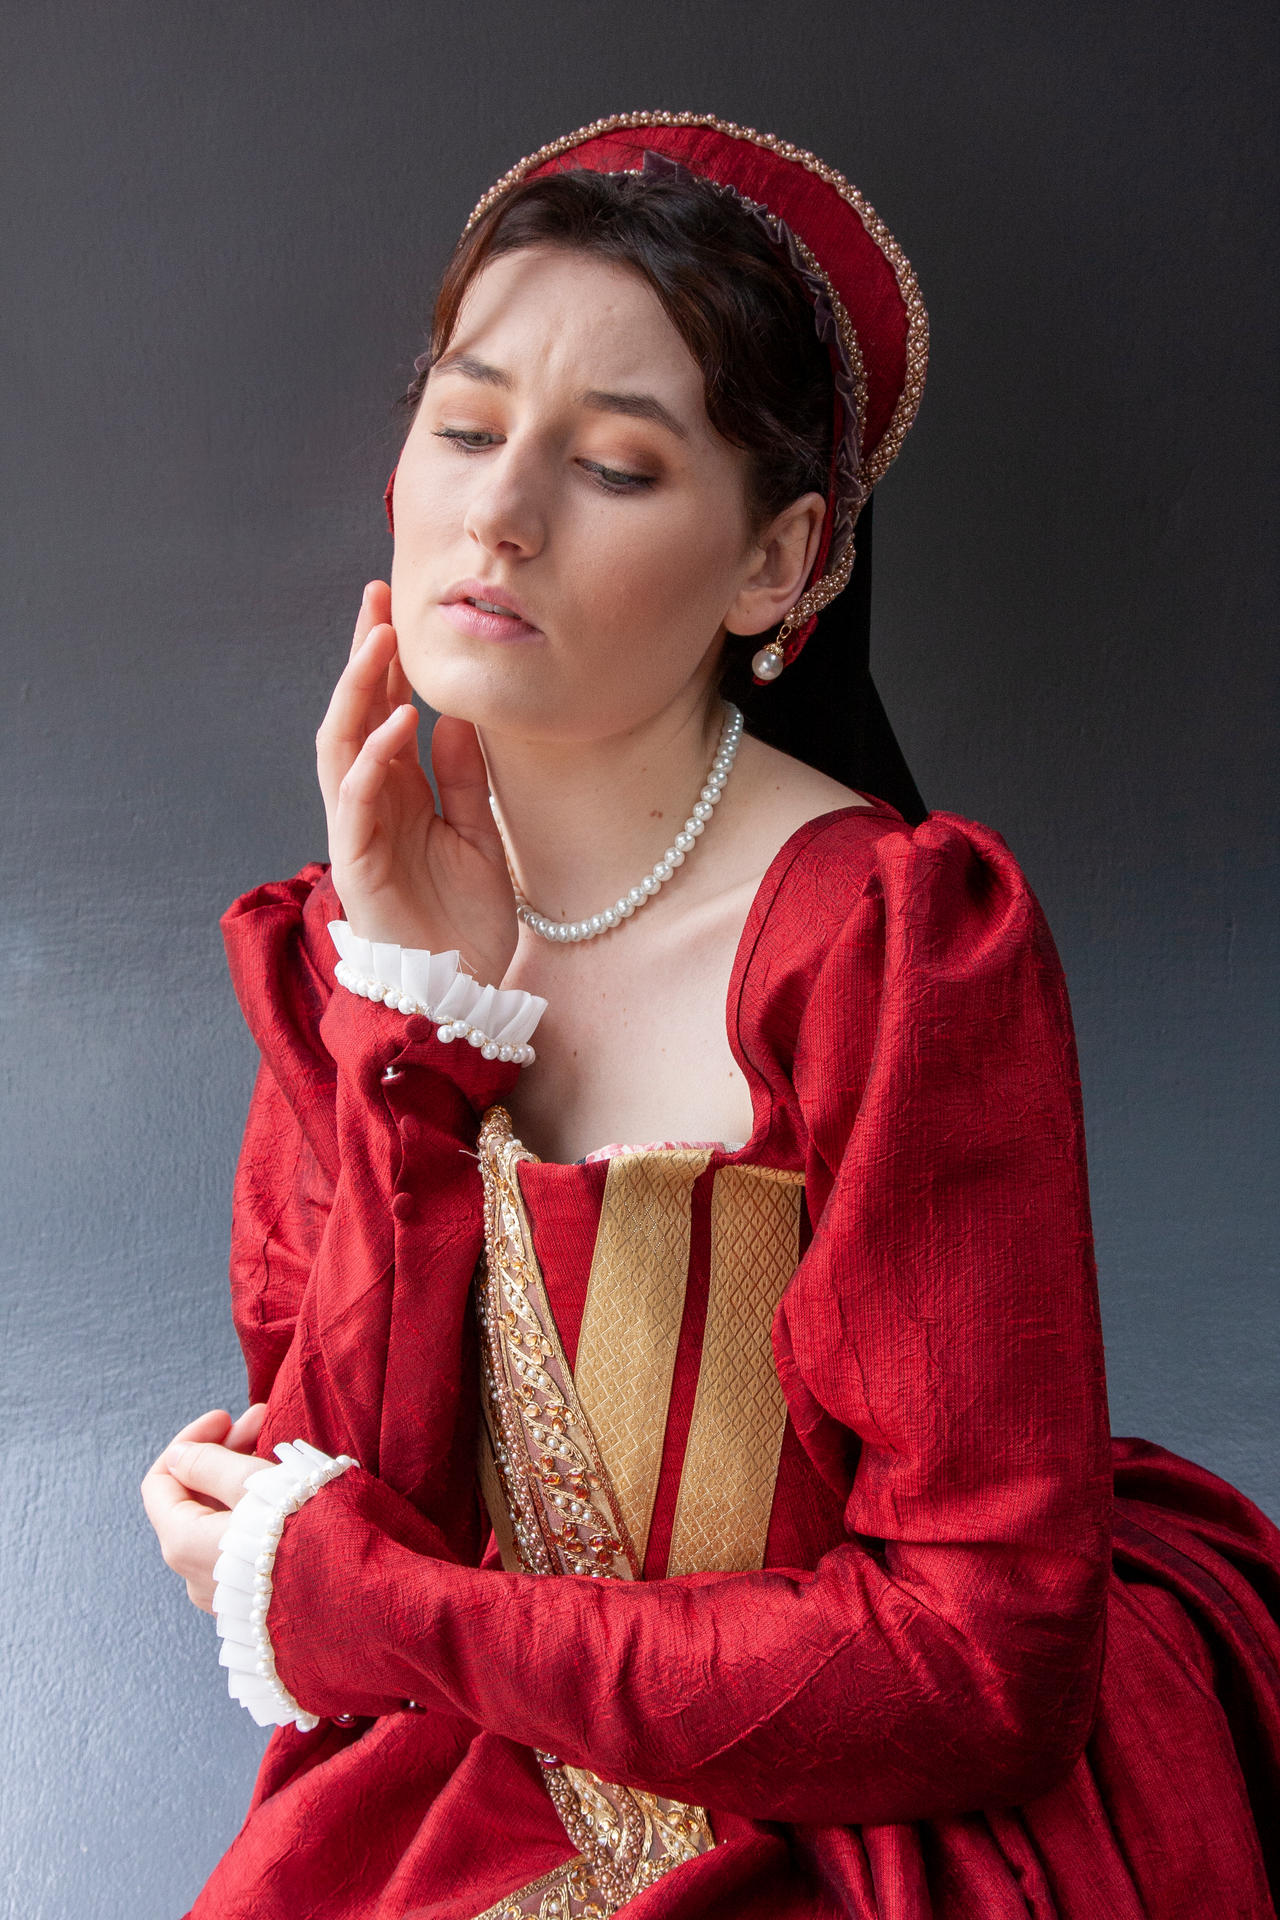 Tudor costume stock 14 by CathleenTarawhiti on DeviantArt